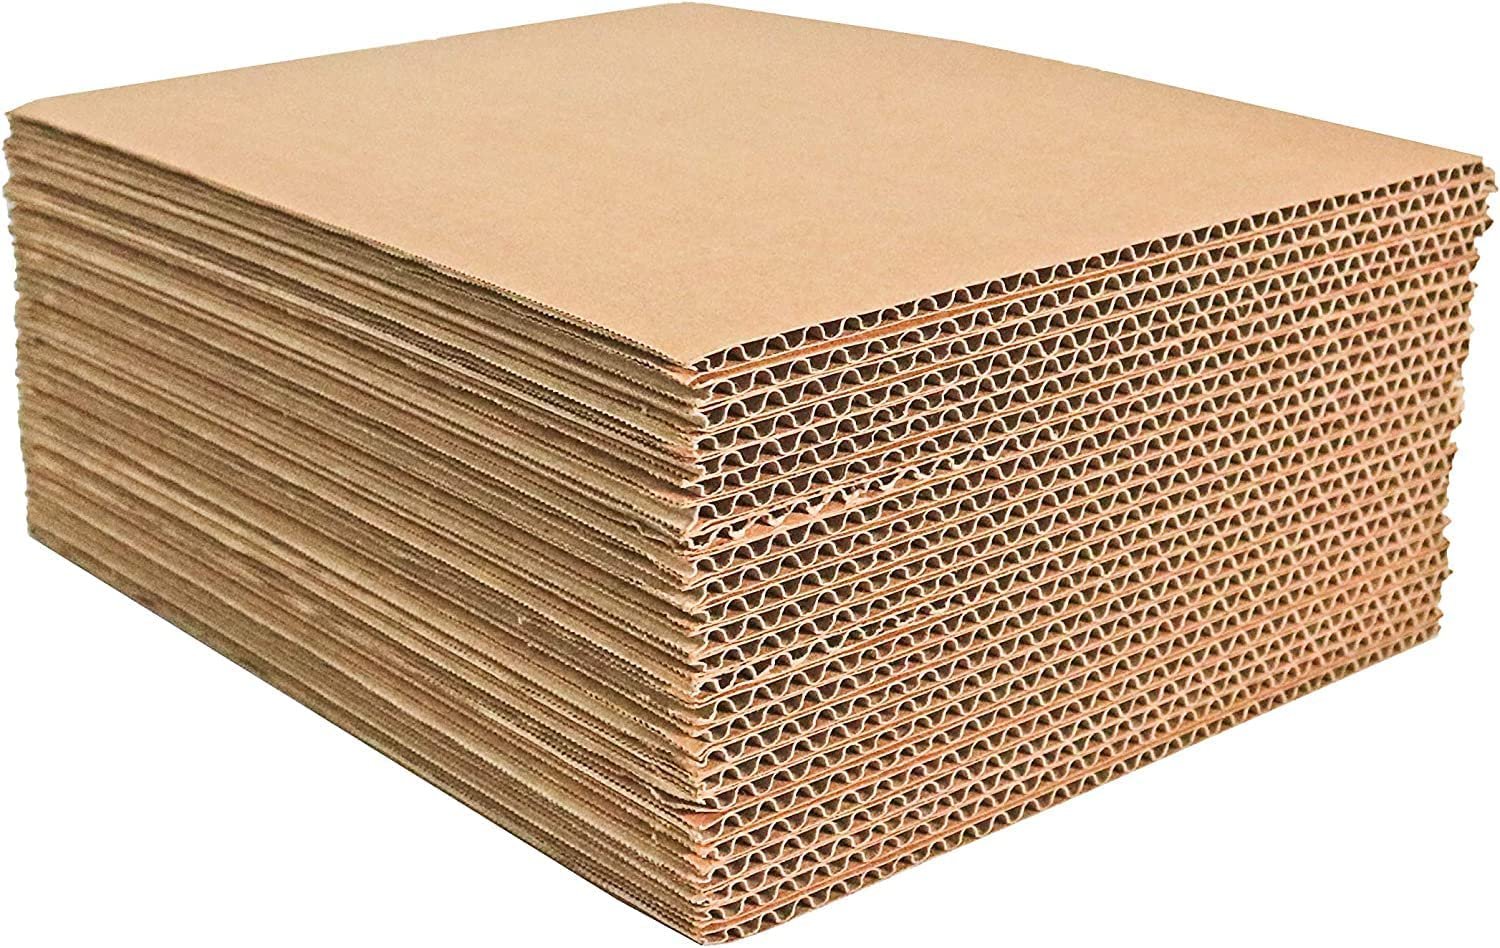 25 12x12 Cardboard Corrugated Pads Inserts Filler Sheet 12 x 12